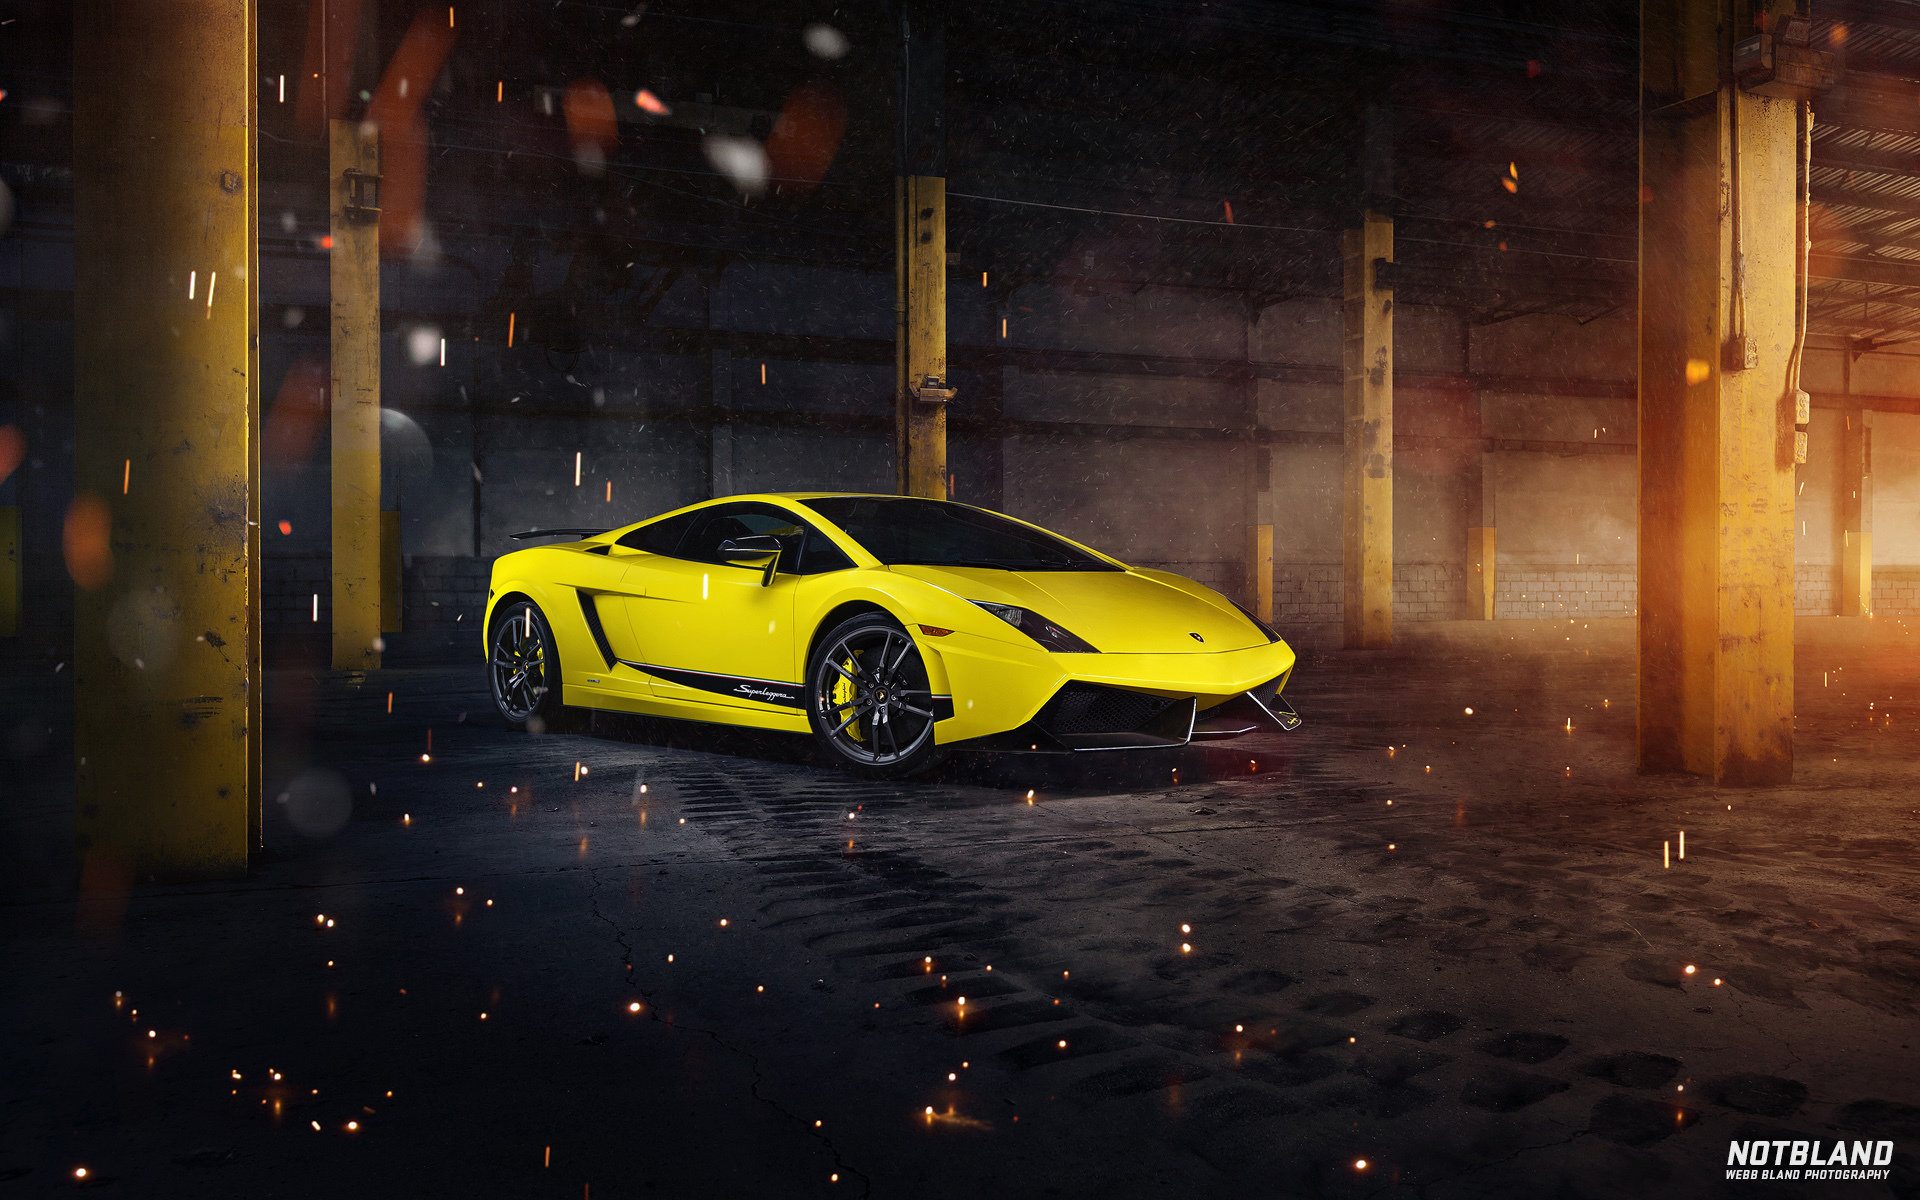 Best Lamborghini Gallardo background ID:293099 for High Resolution hd 1920x1200 PC